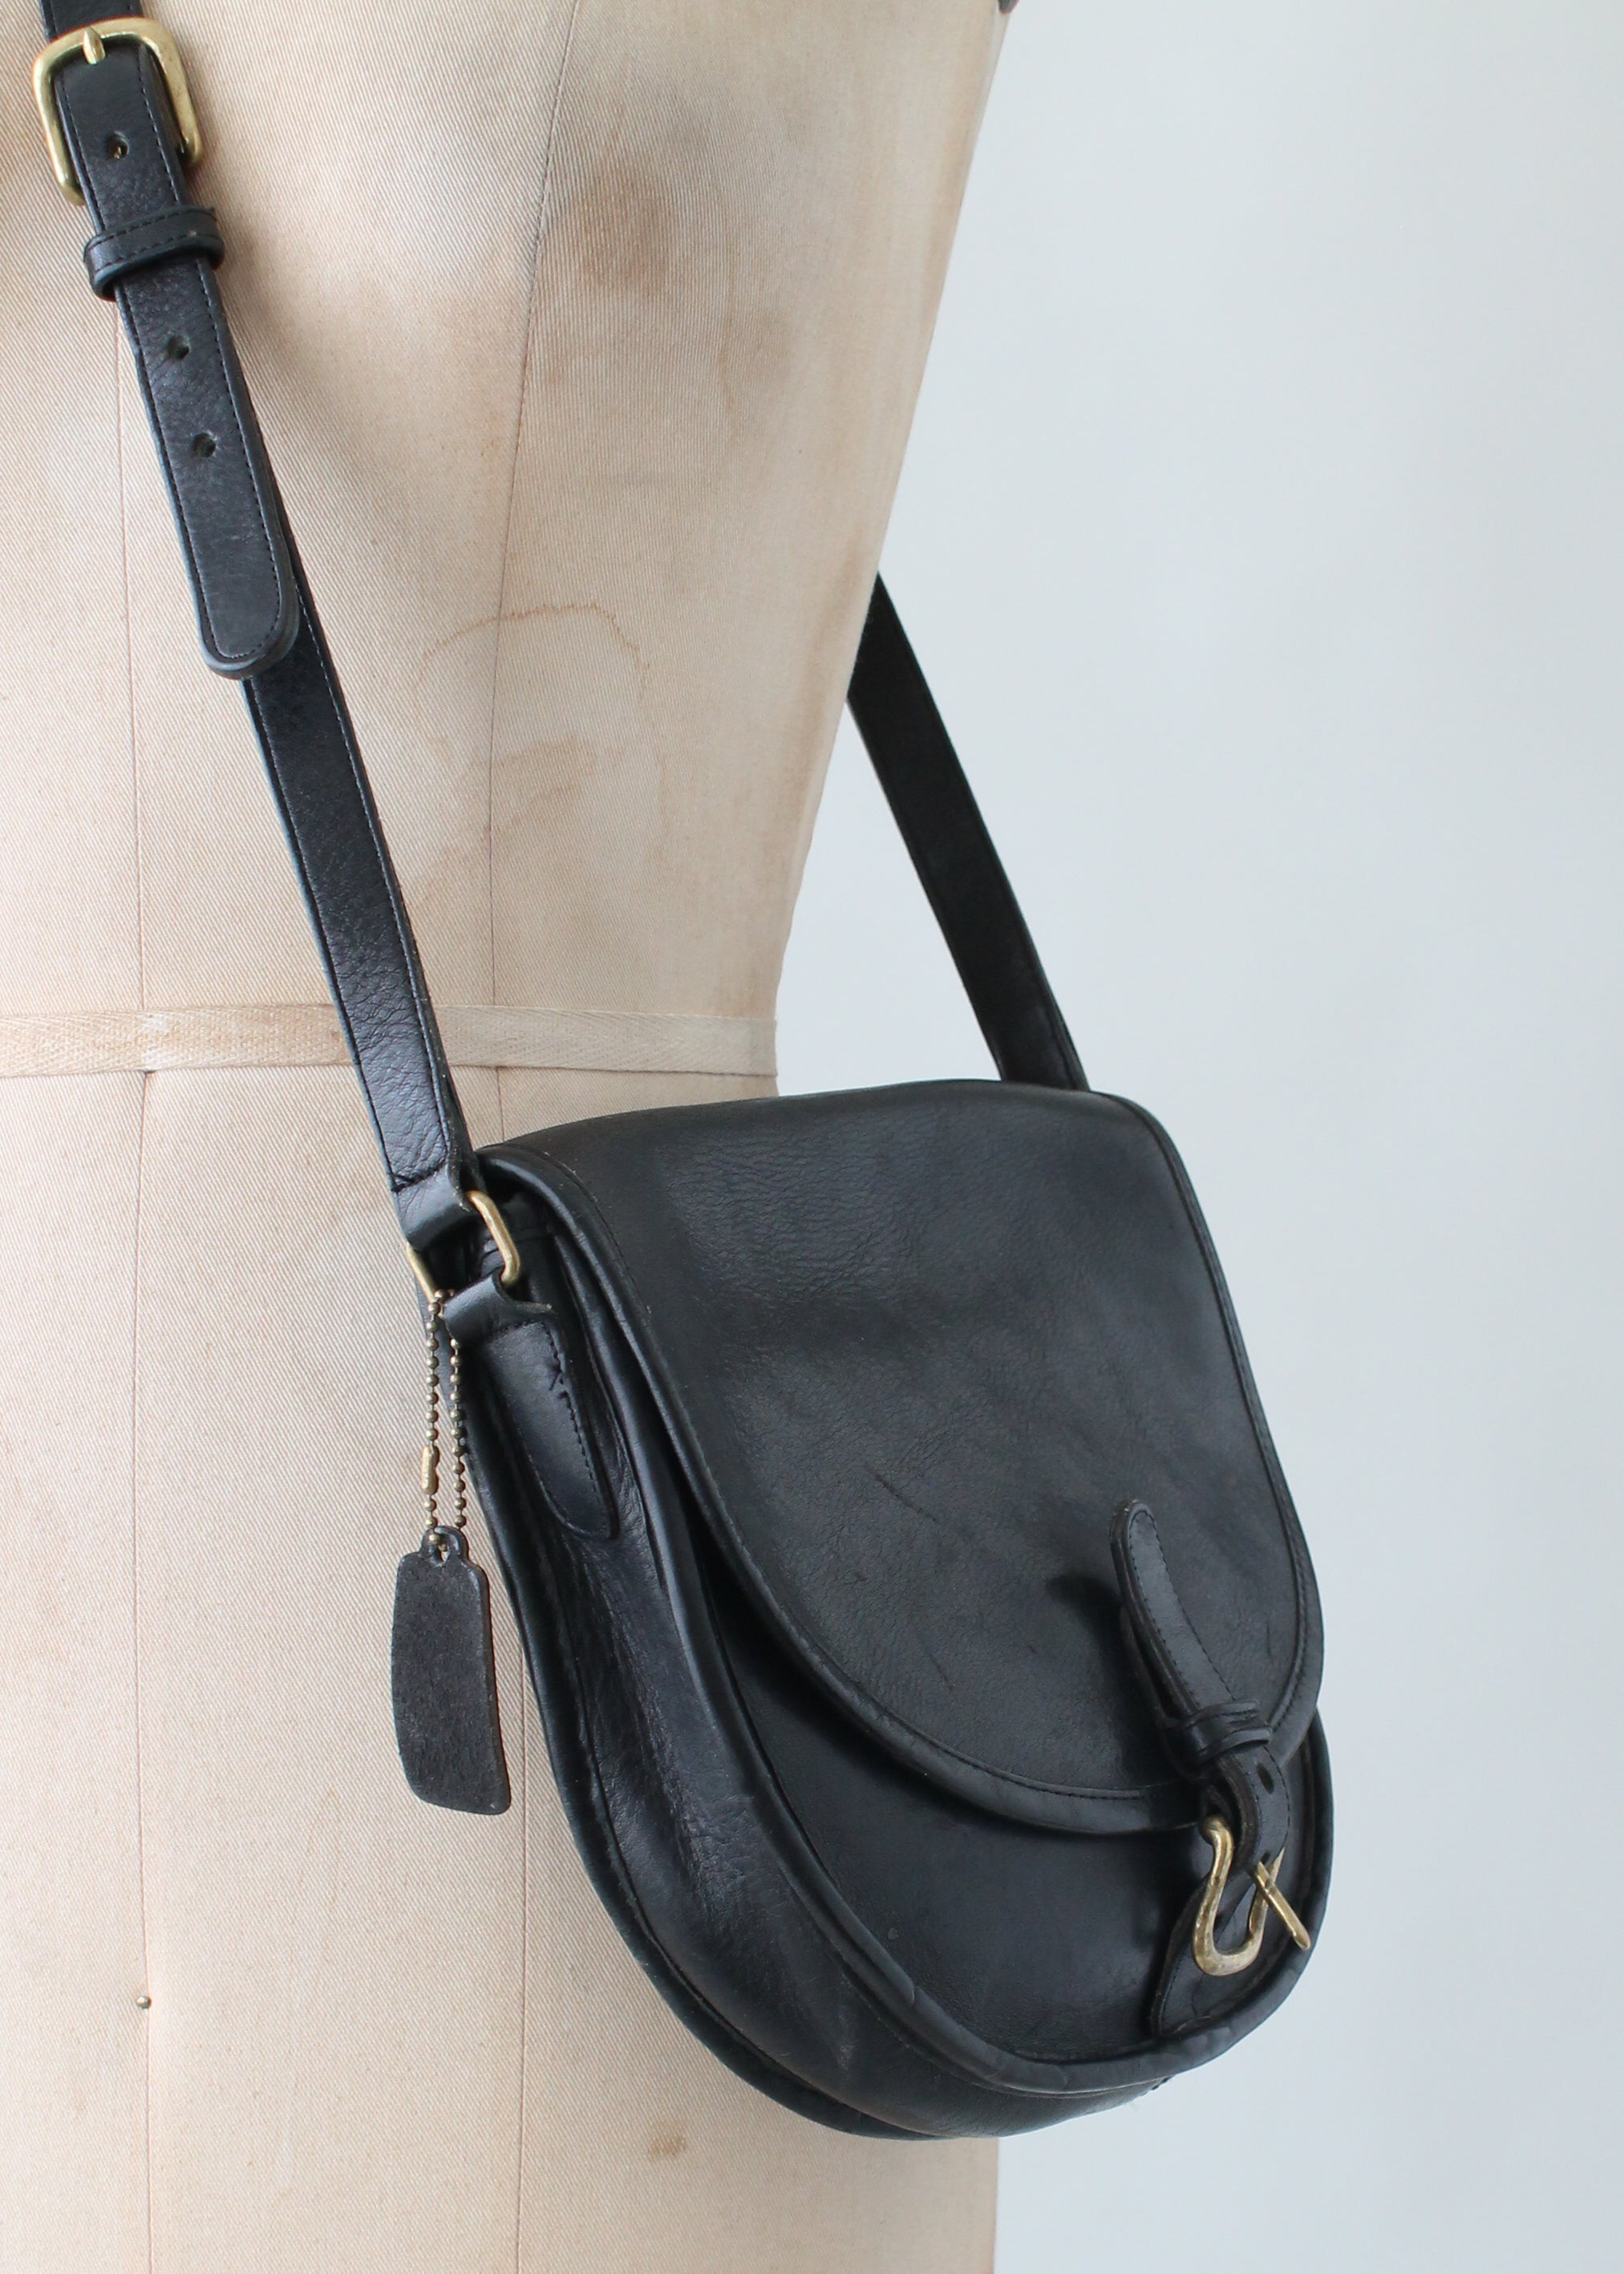 Vintage COACH Black Leather Handbag Purse Short Straps with tag 14x9 NICE!